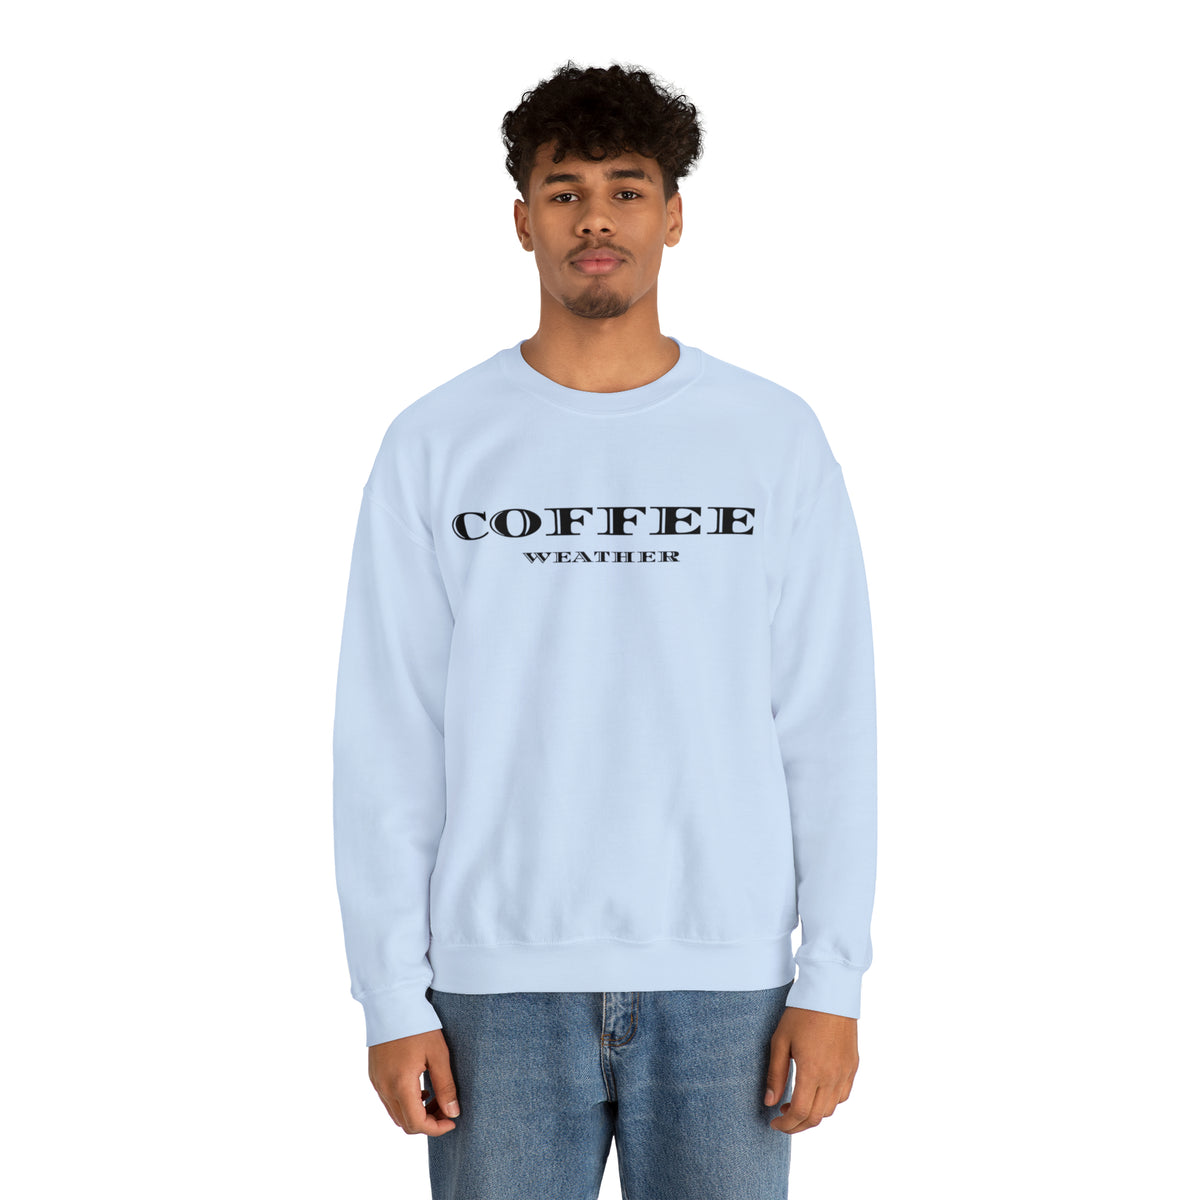 Coffee Weather Sweatshirt, Coffee Weather, Cute Coffee Weather Sweatshirt, Trendy, Sweatshirts, Cute Sweatshirt, Oversized Fit